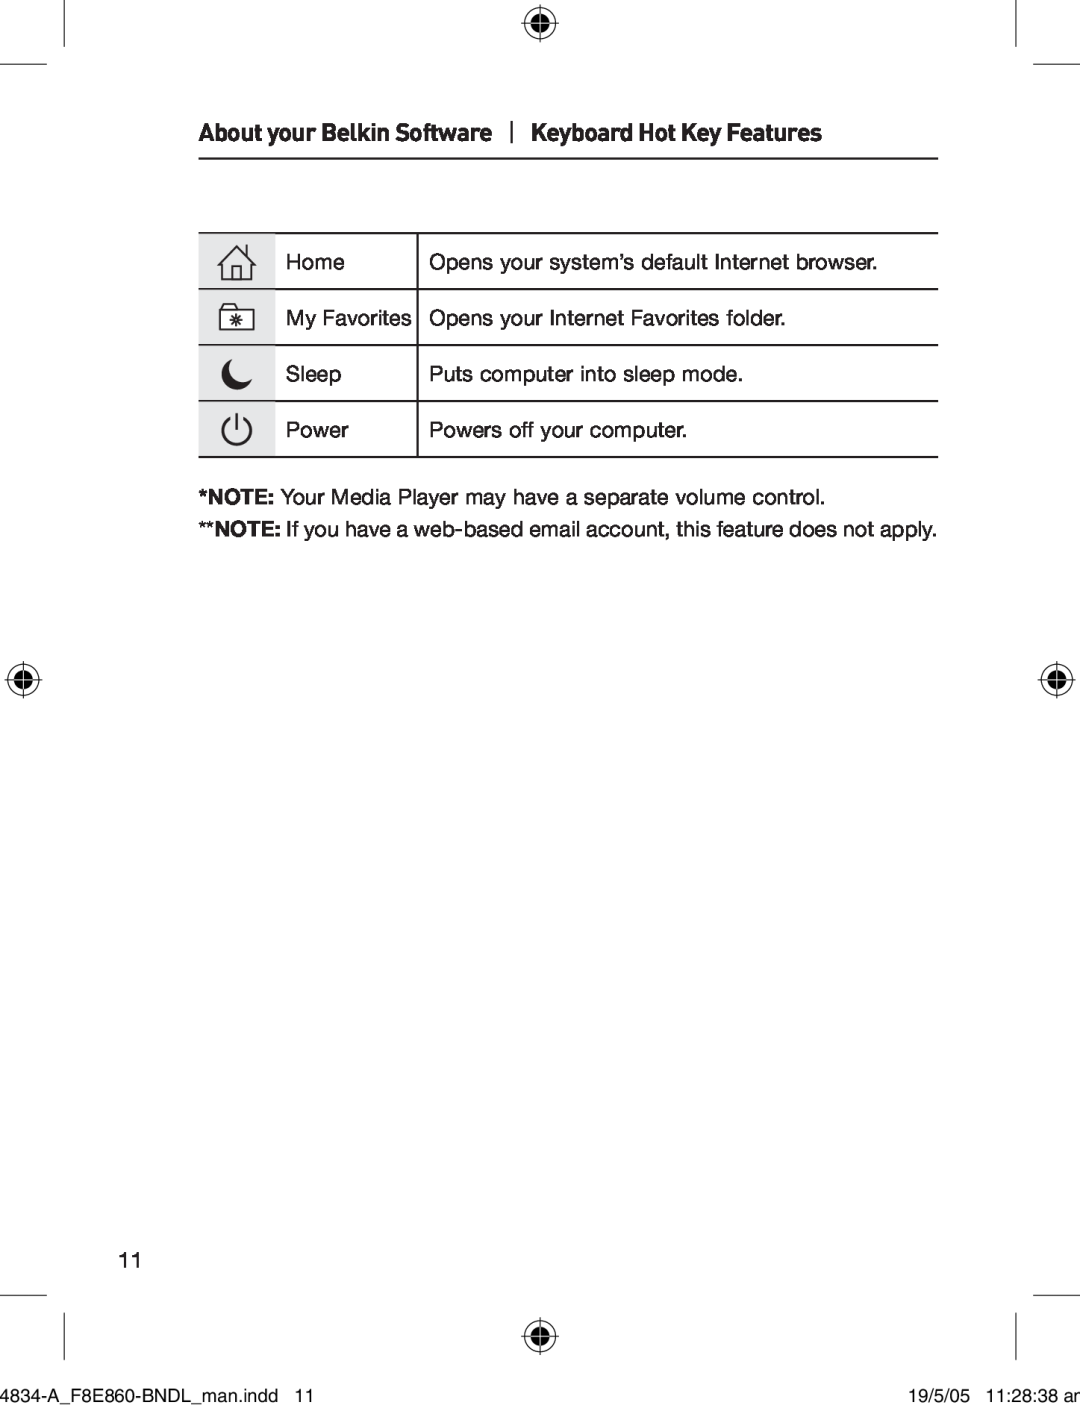 Belkin 280 manual About your Belkin Software Keyboard Hot Key Features, Home 